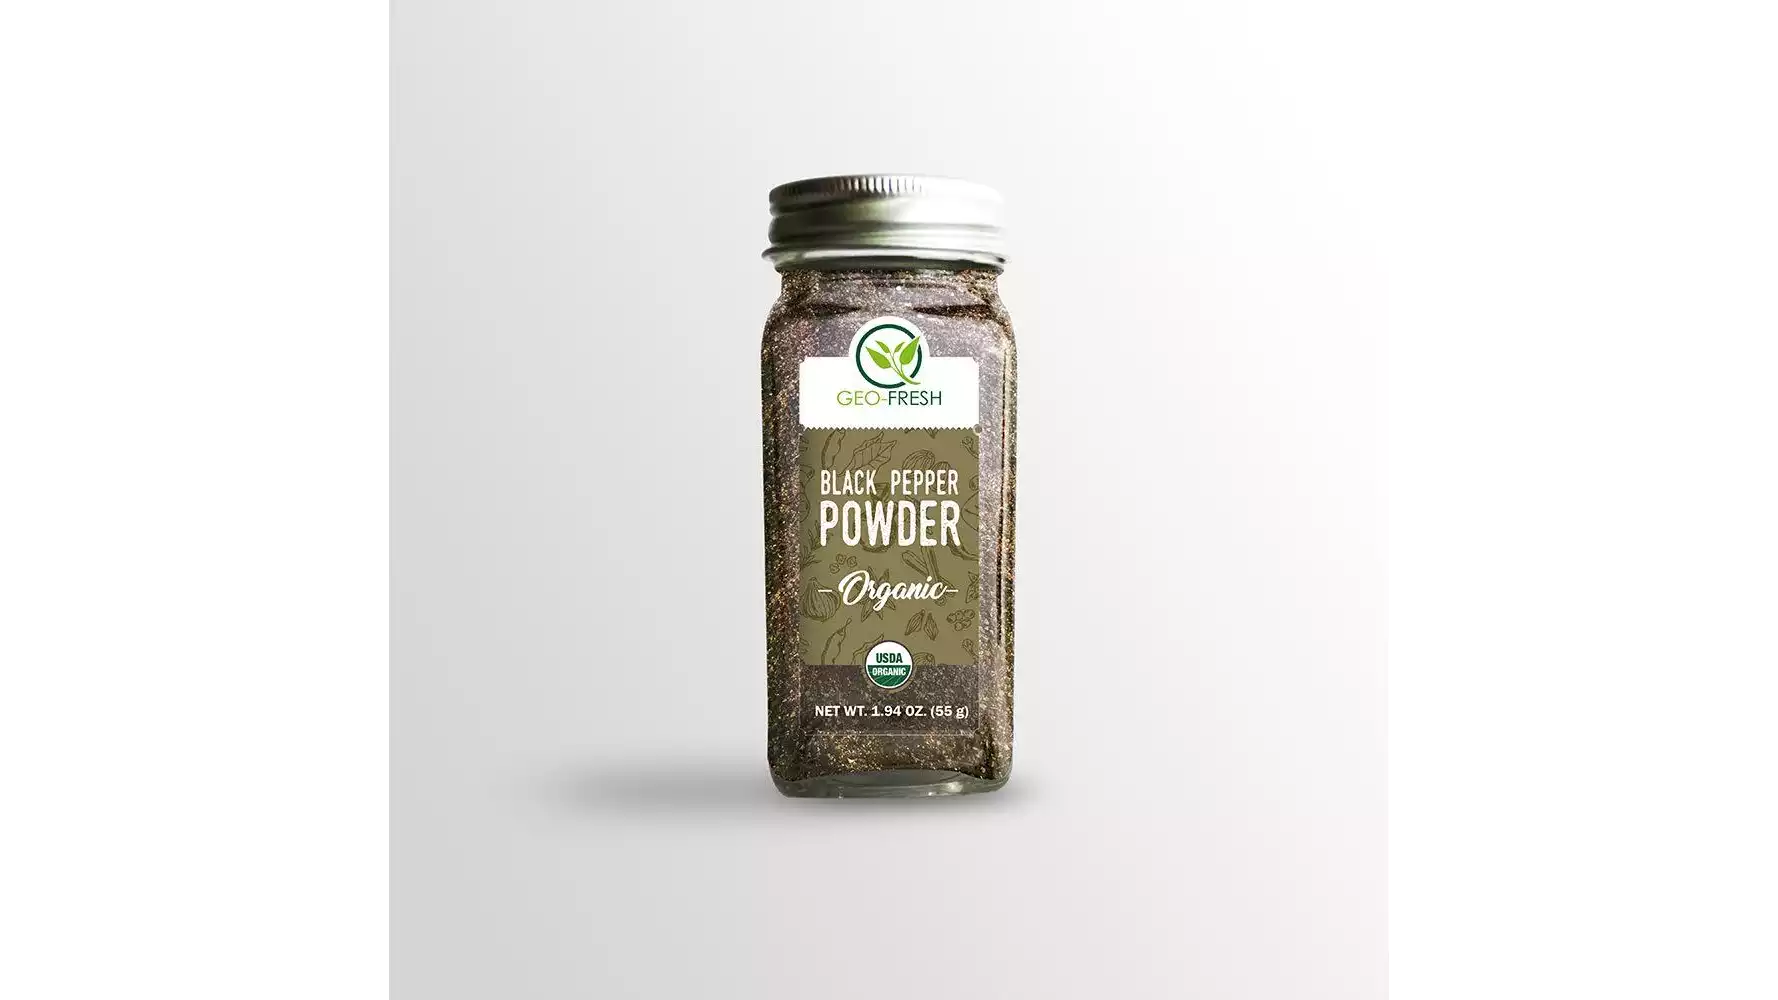 Geo-Fresh Organic Black Papper Powder (55g)